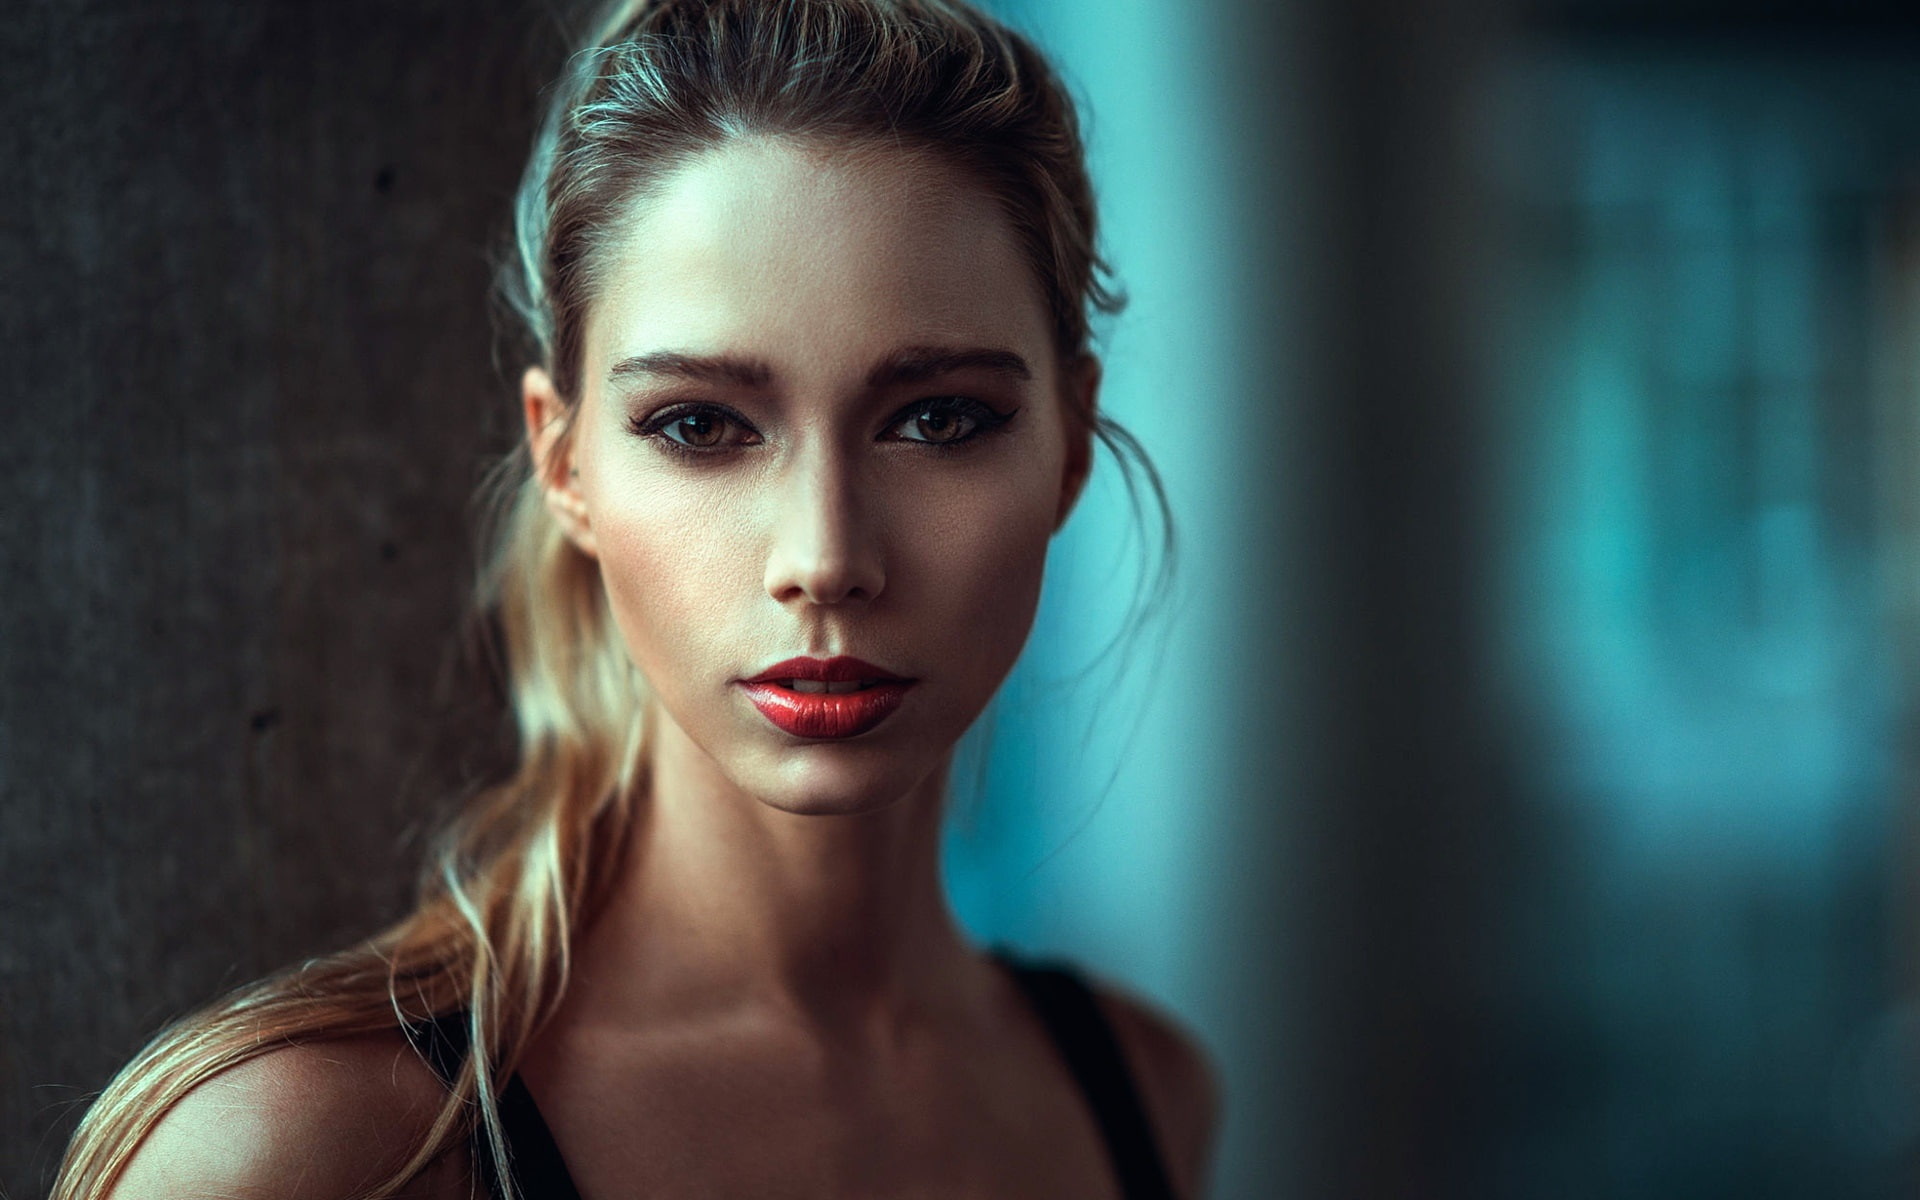 Blonde girl, makeup, portrait, red lip